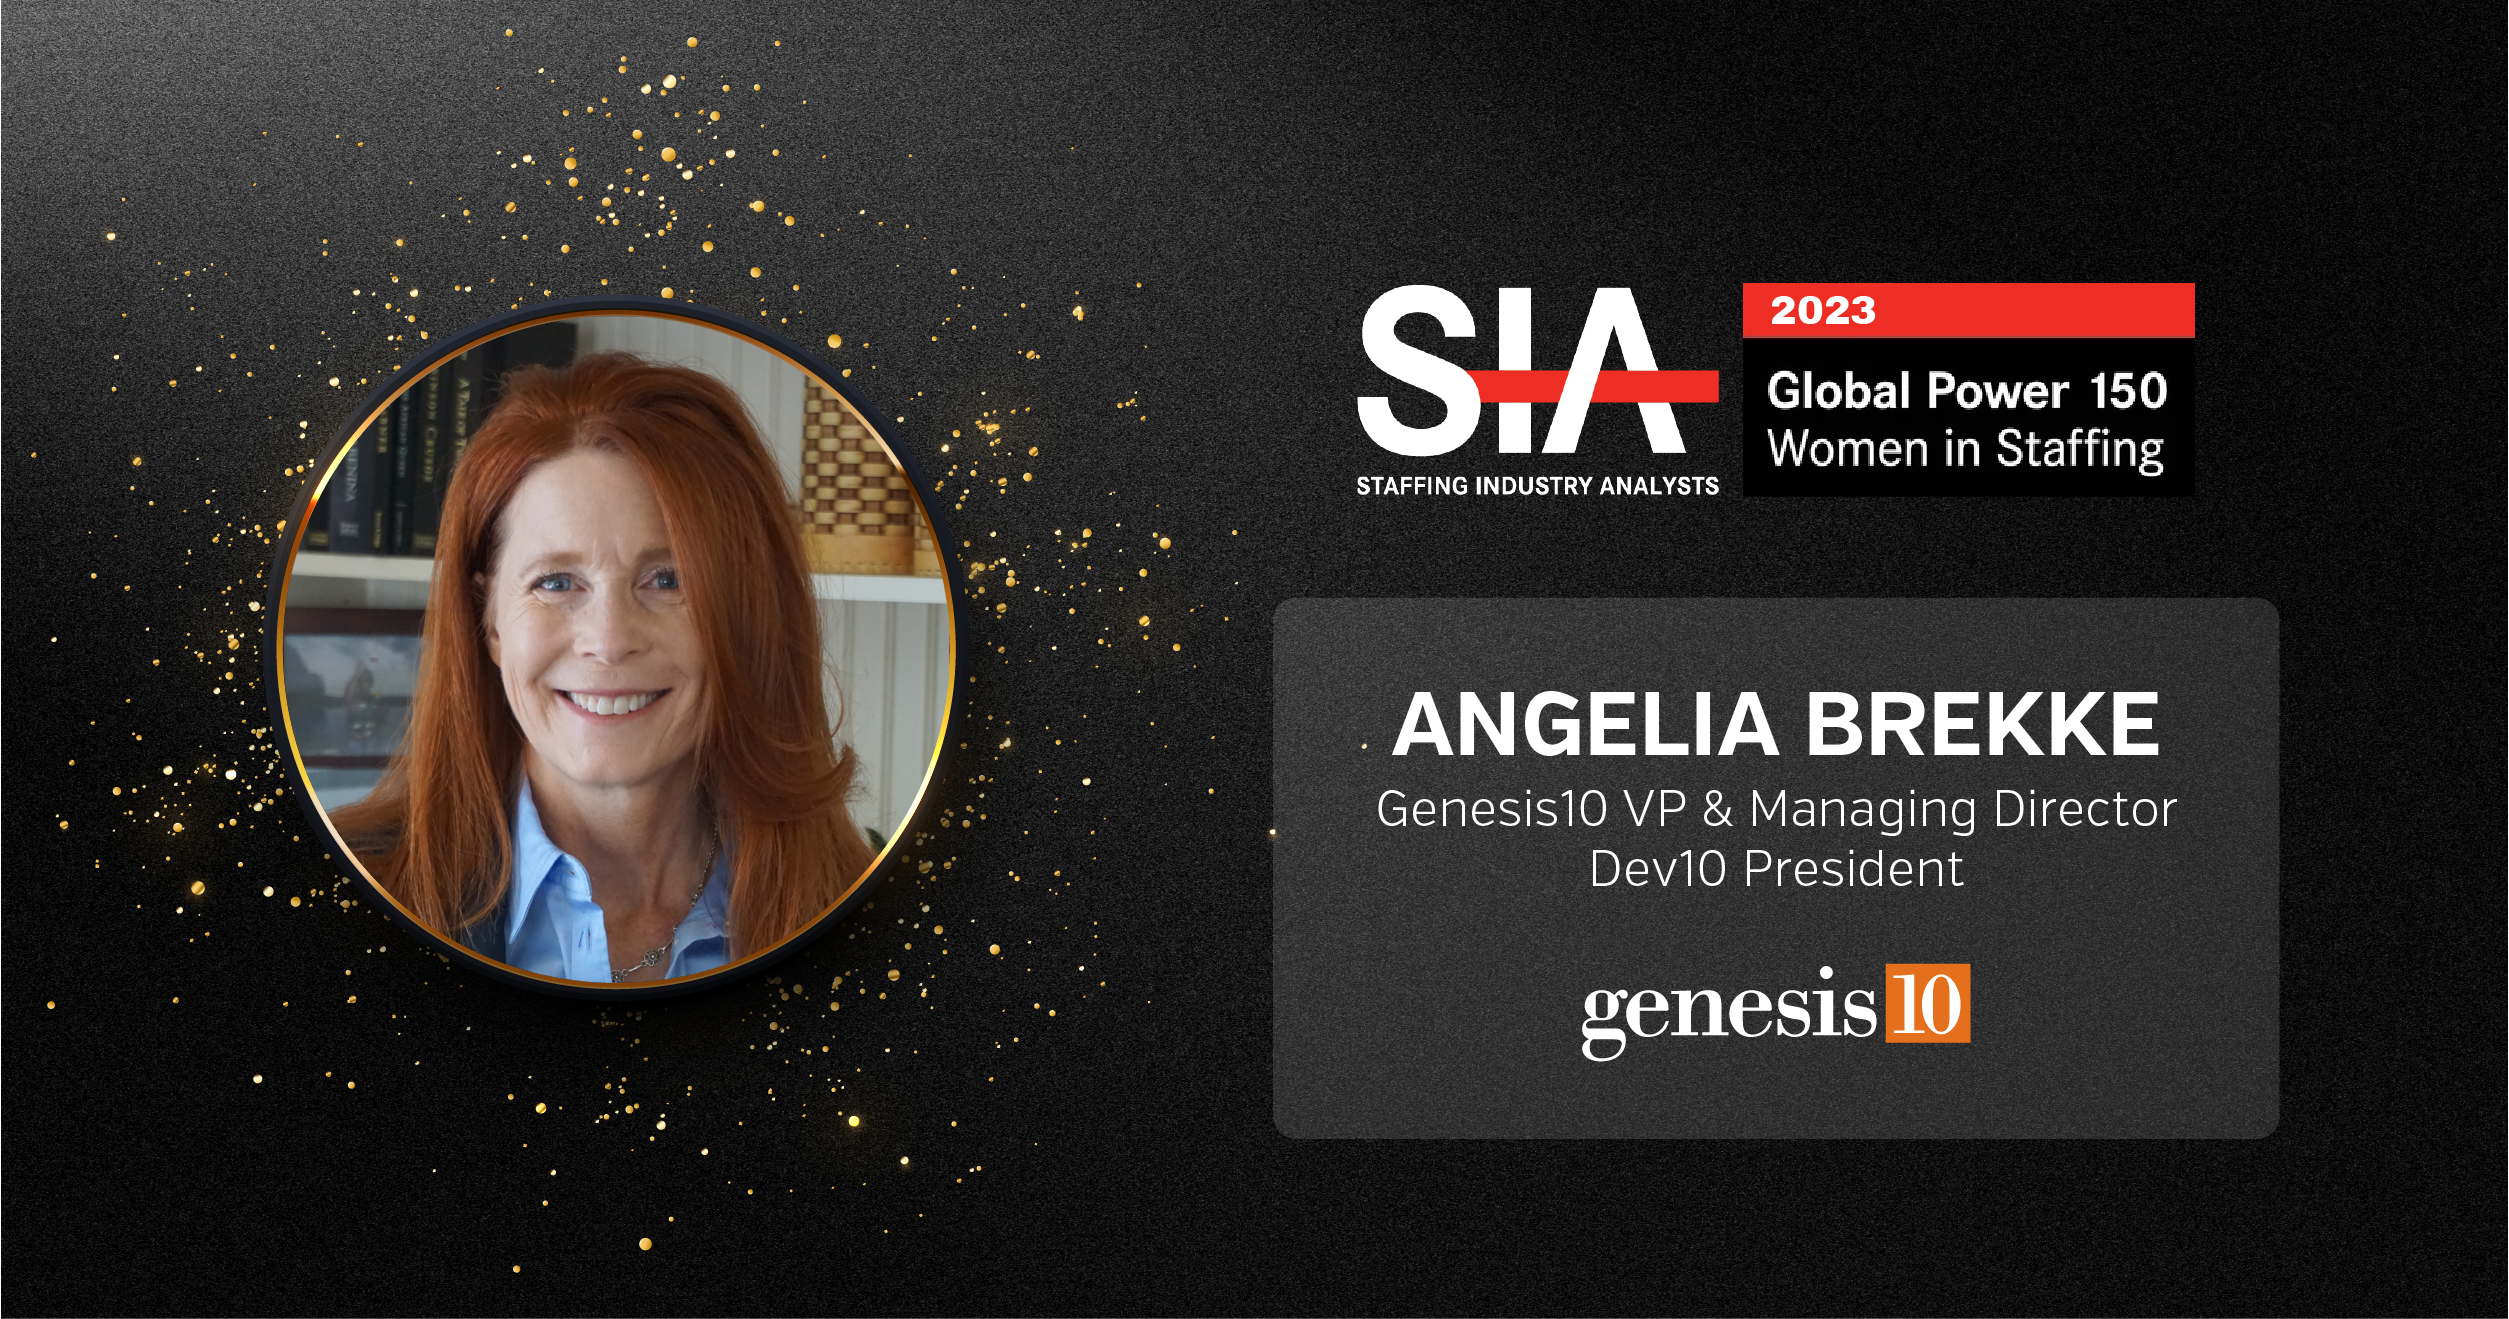 SIA Global Power 150 – Women in Staffing - Angelia Brekke